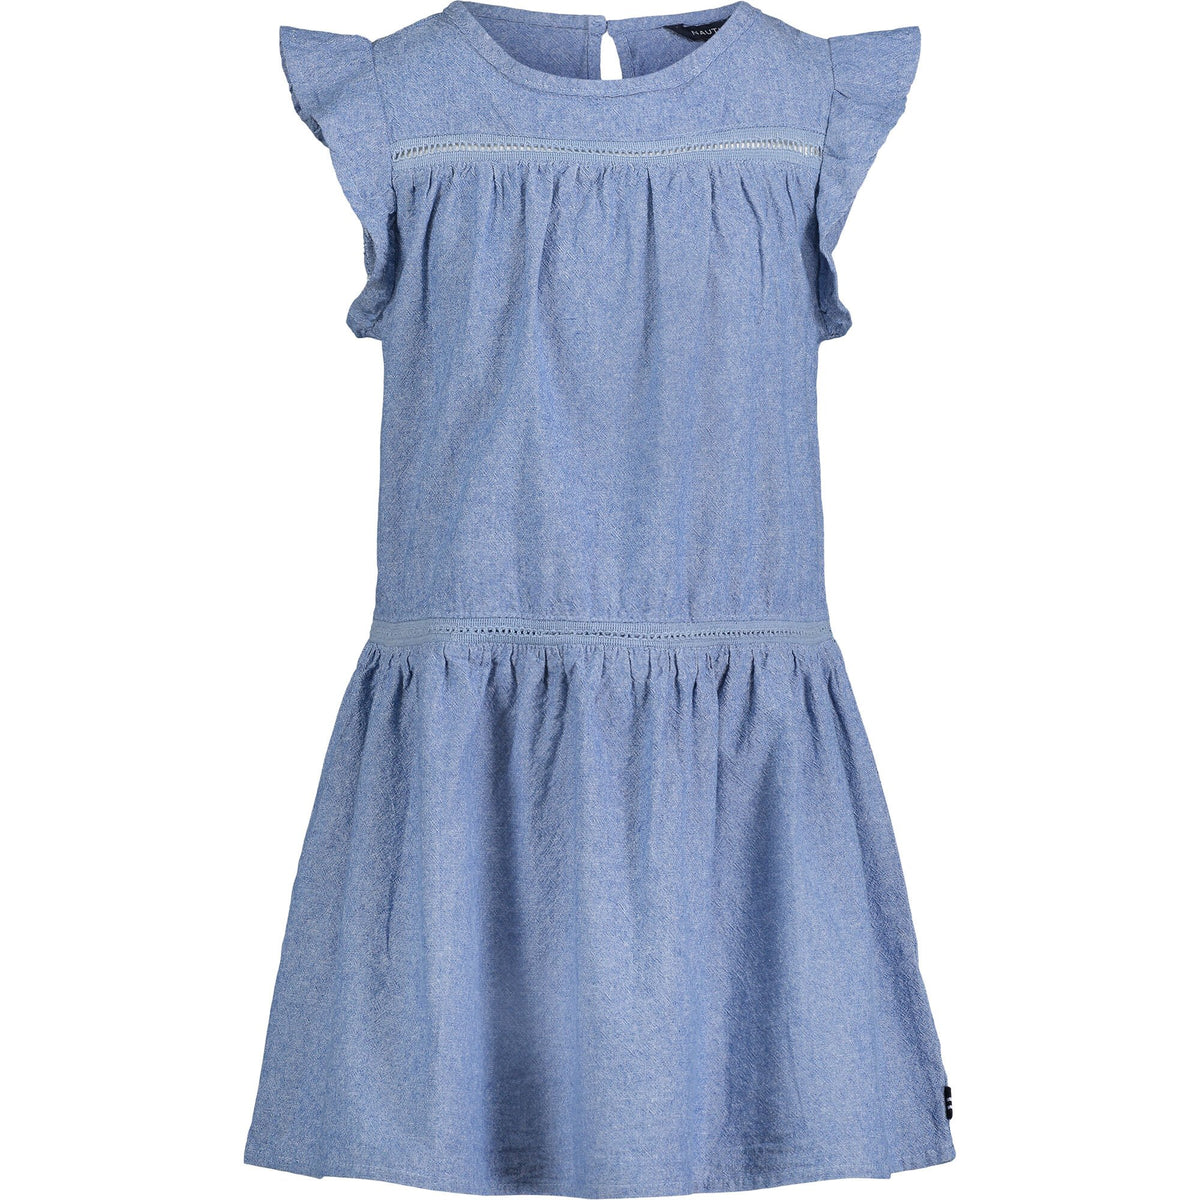 Nautica Toddler Girls' Flutter-Sleeve Chambray Dress (2T-4T) Light Tide Water Wash